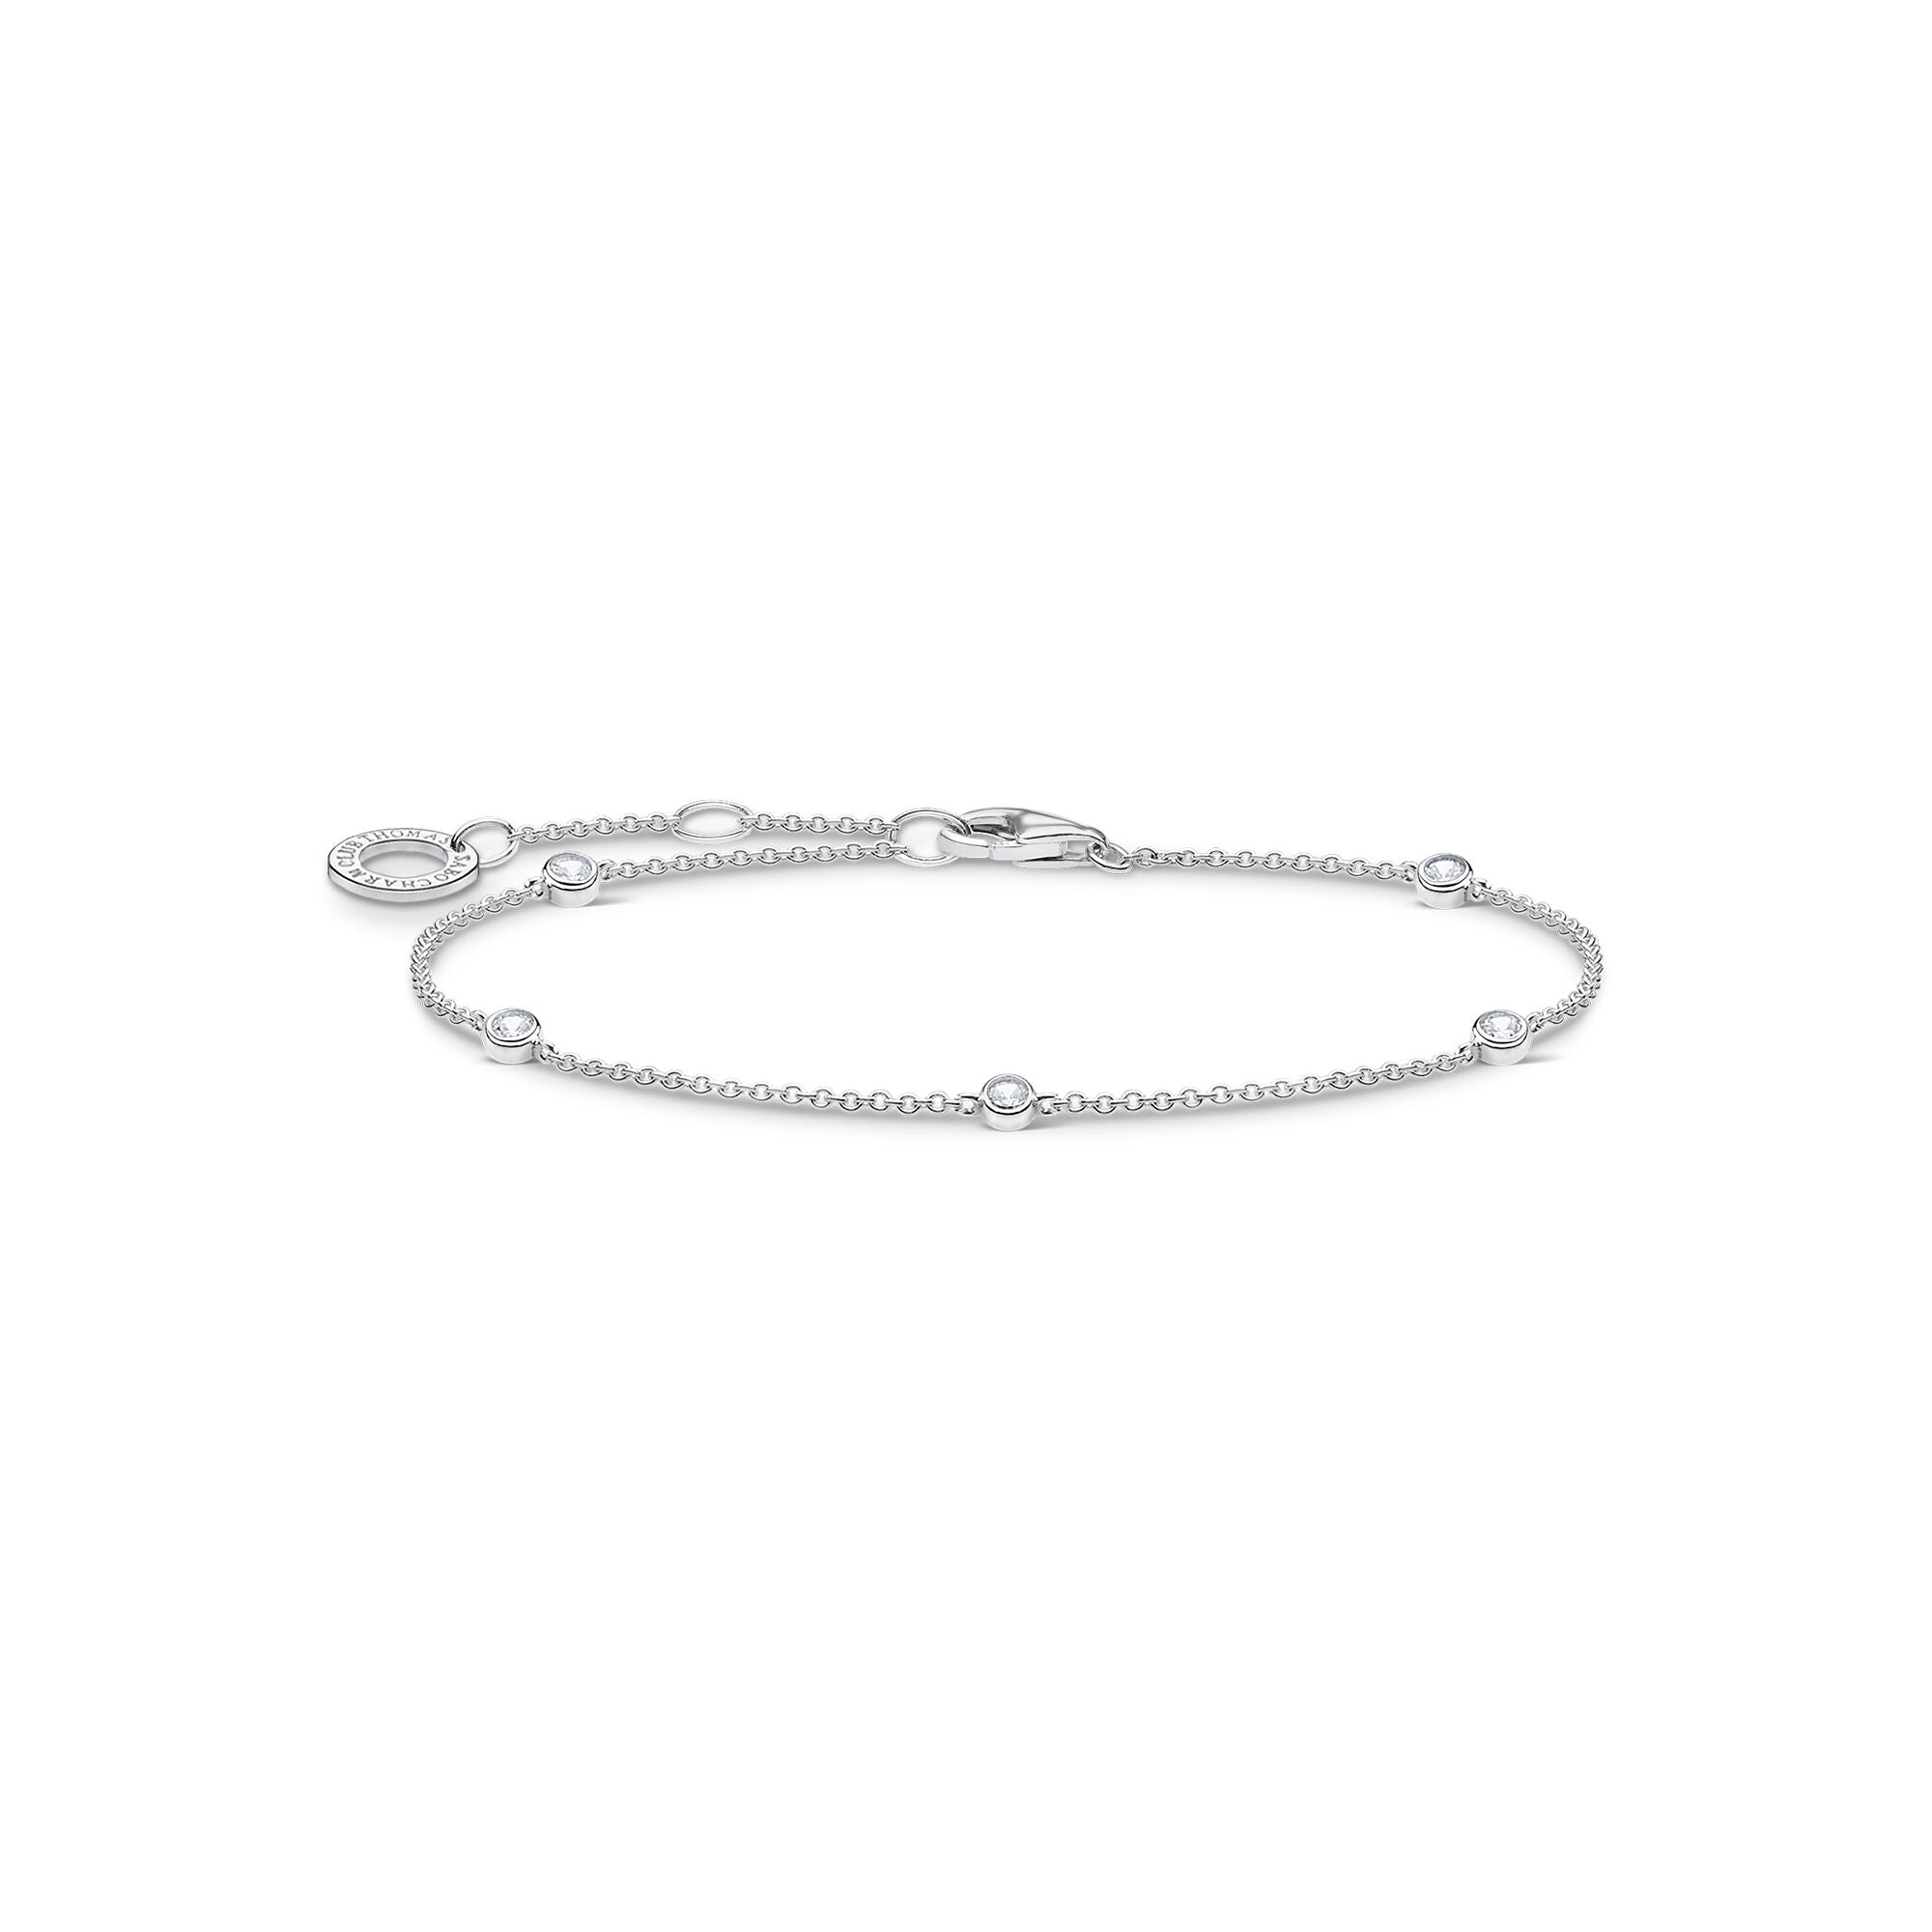 Bracelet With White Stones - Silver